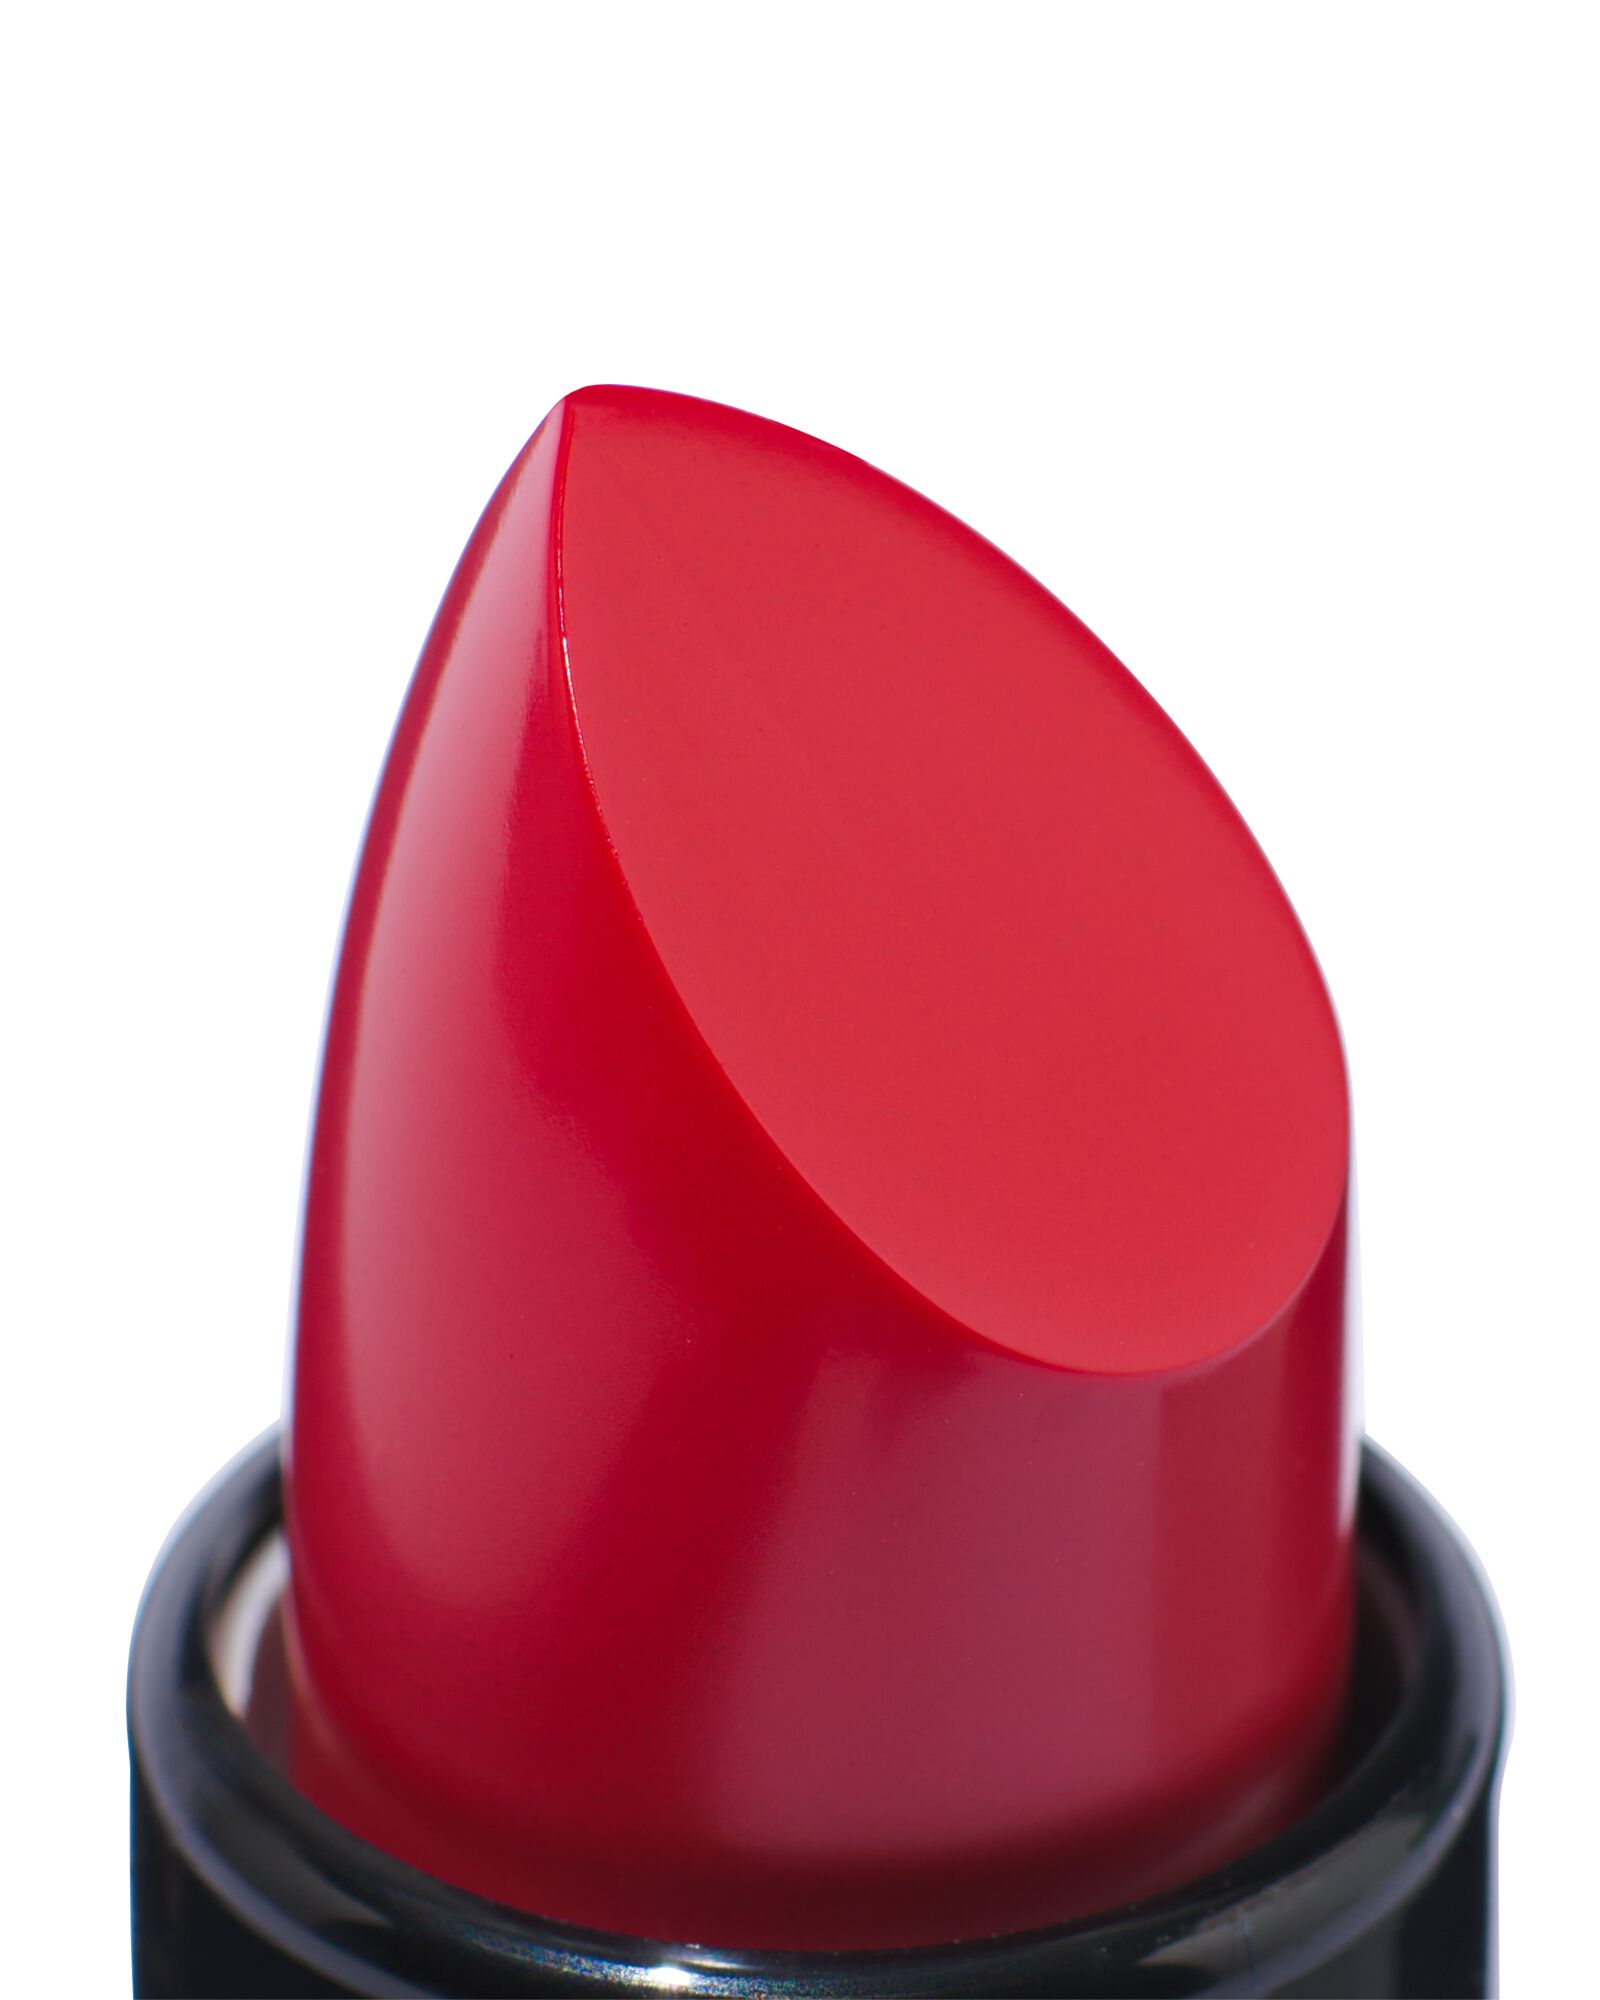 HEMA Moisturising Lipstick 934 Classic Red - Crystal Finish (rood)